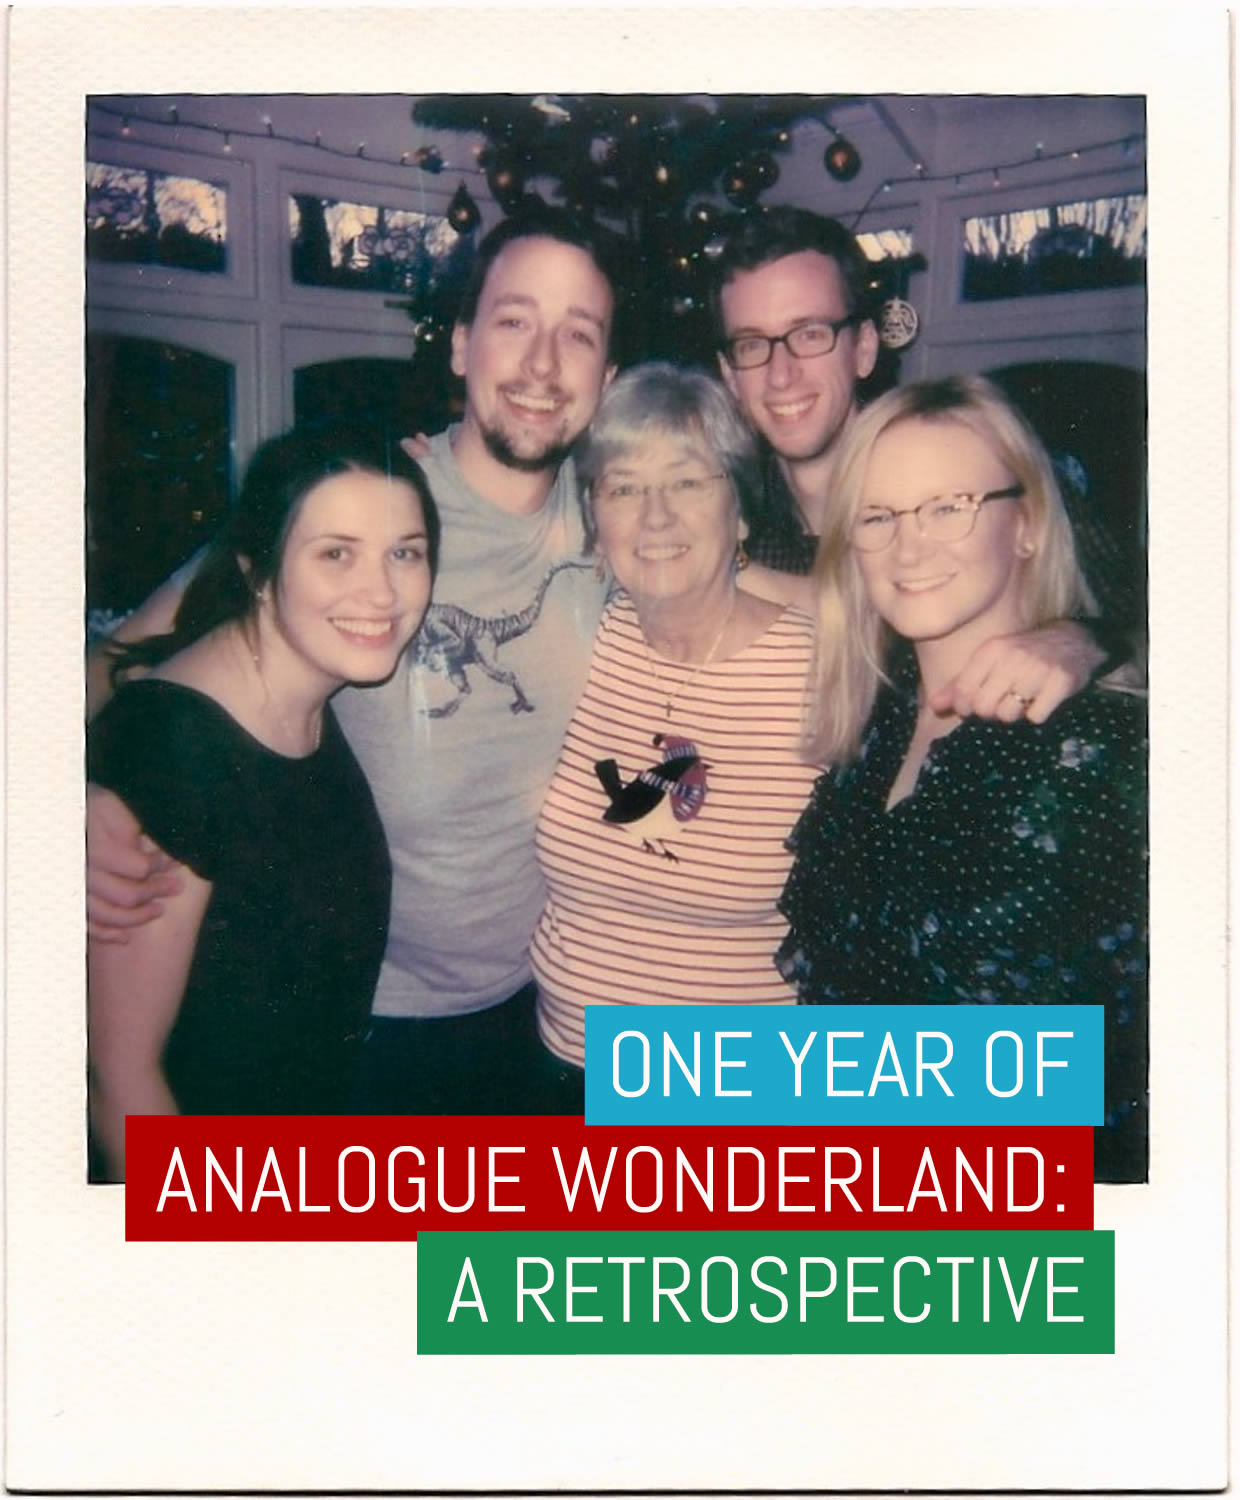 One year of Analogue Wonderland: a retrospective